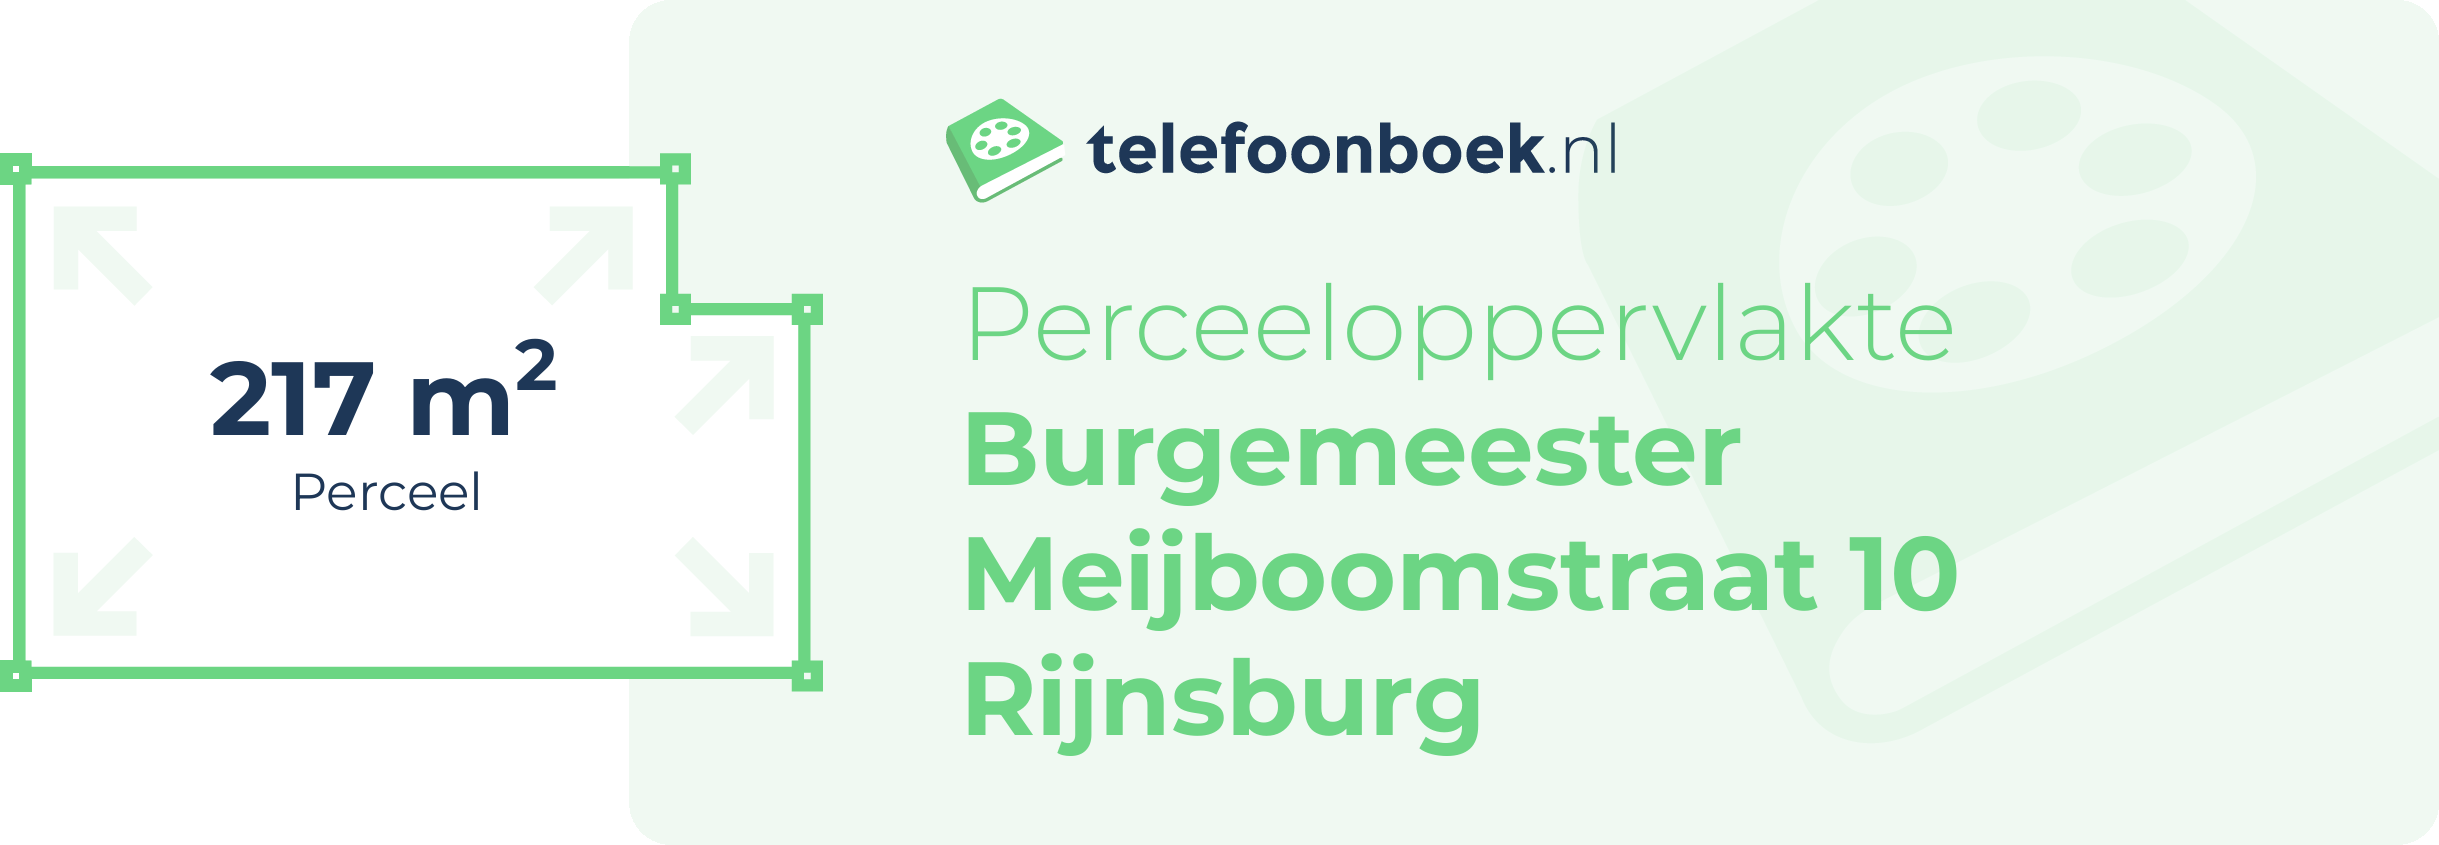 Perceeloppervlakte Burgemeester Meijboomstraat 10 Rijnsburg